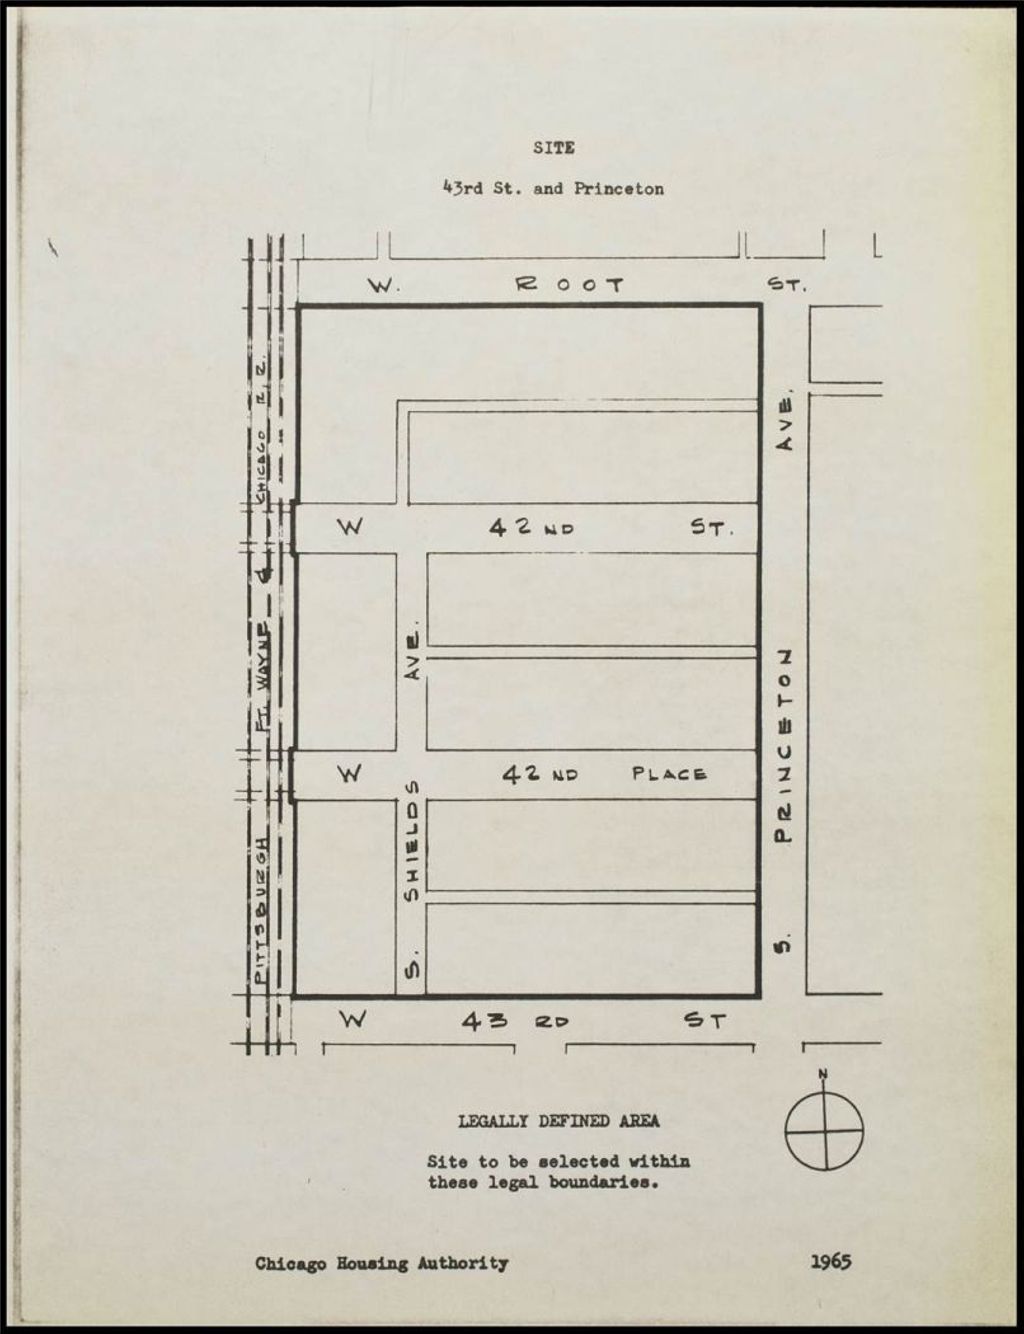 Miniature of CHA Legal Boundaries, 1966 (Folder III-341)